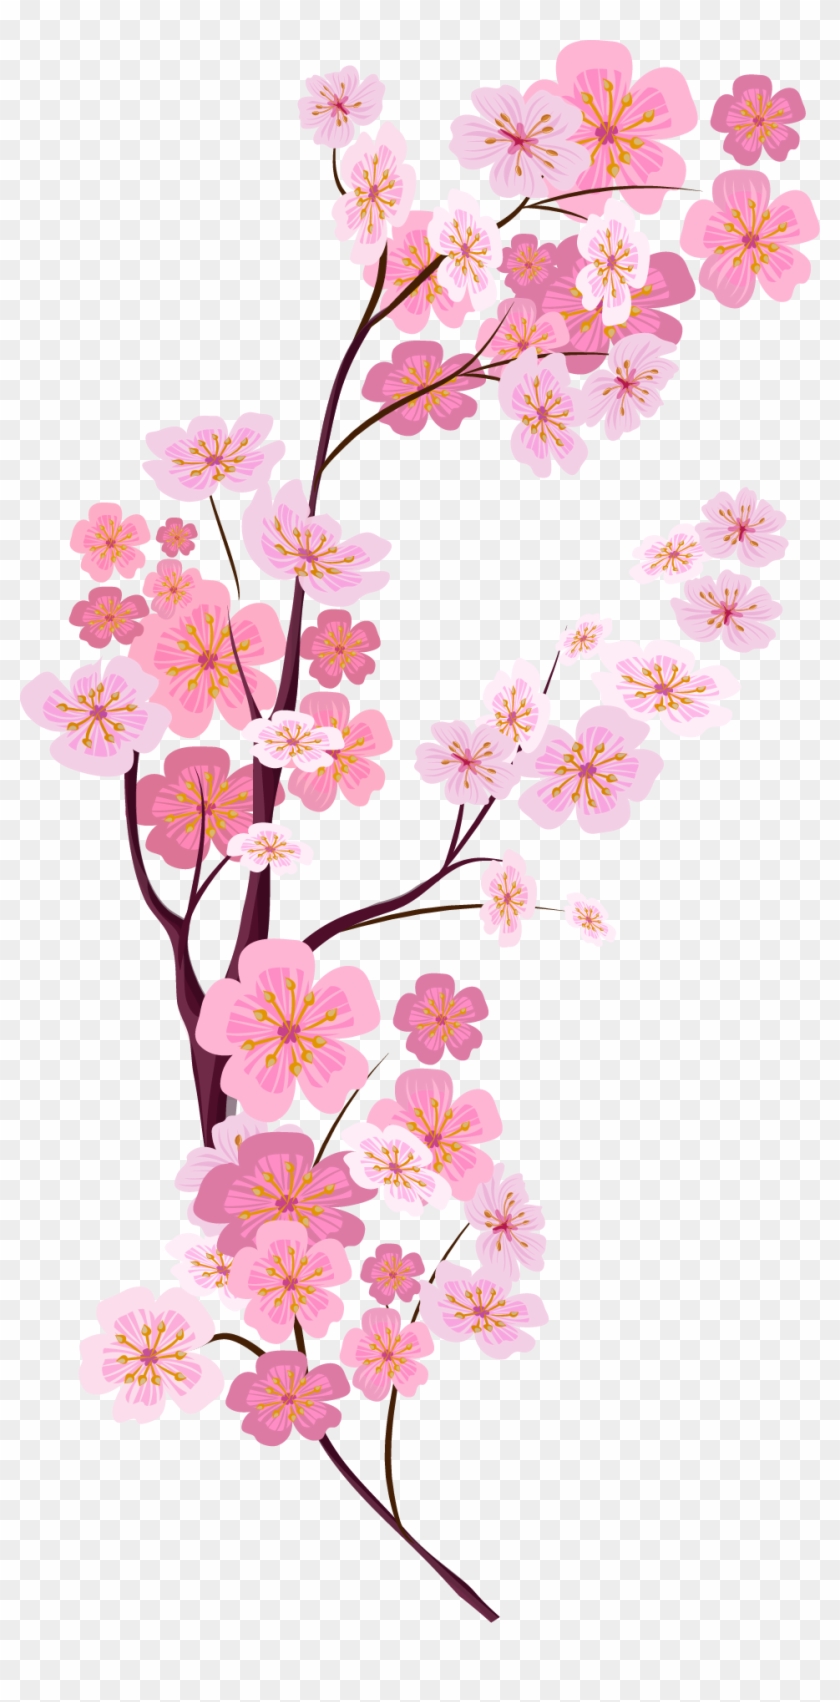 Cherry Blossom Euclidean Vector - Cherry Blossom Vector Png #802143